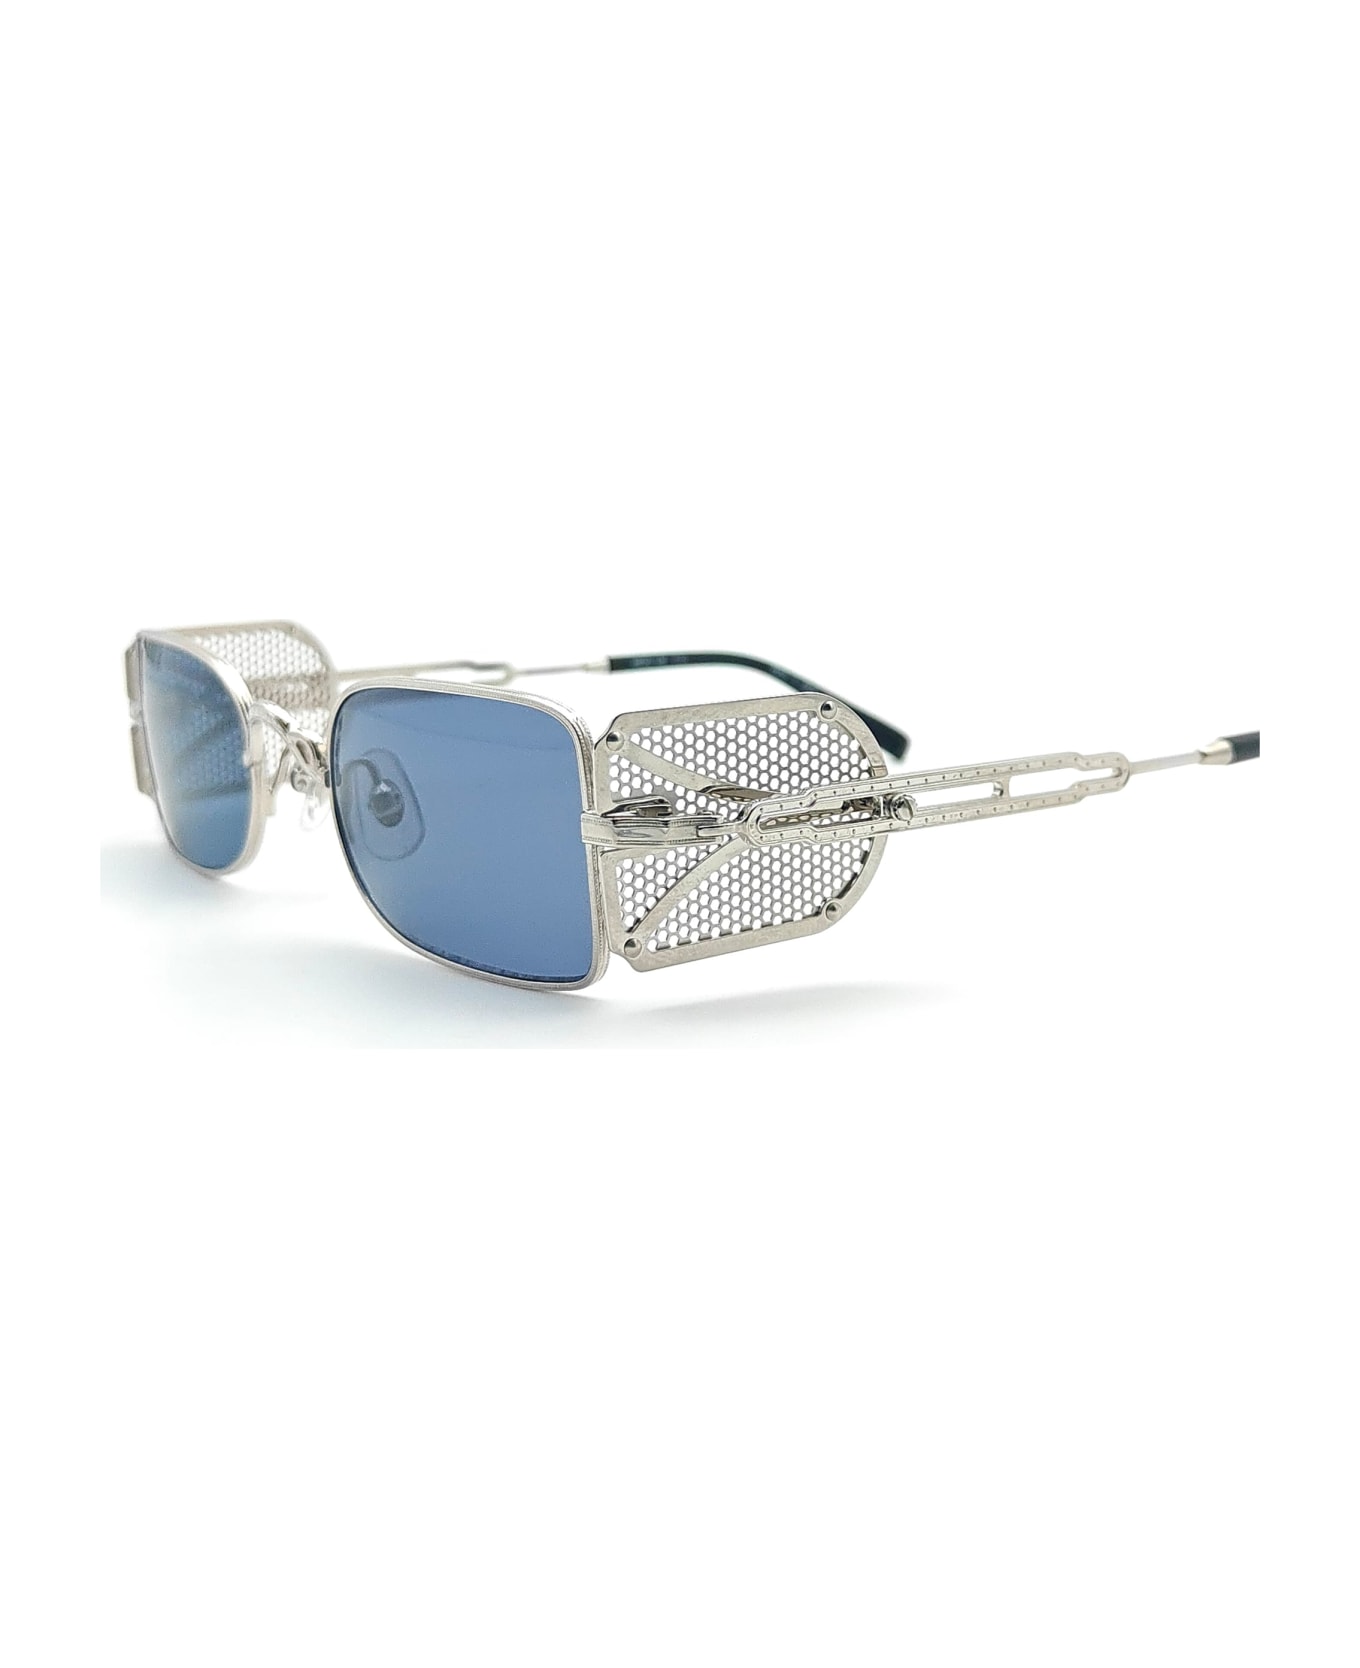 Matsuda 10611h - Palladium White / Brushed Silver Sunglasses - Silver